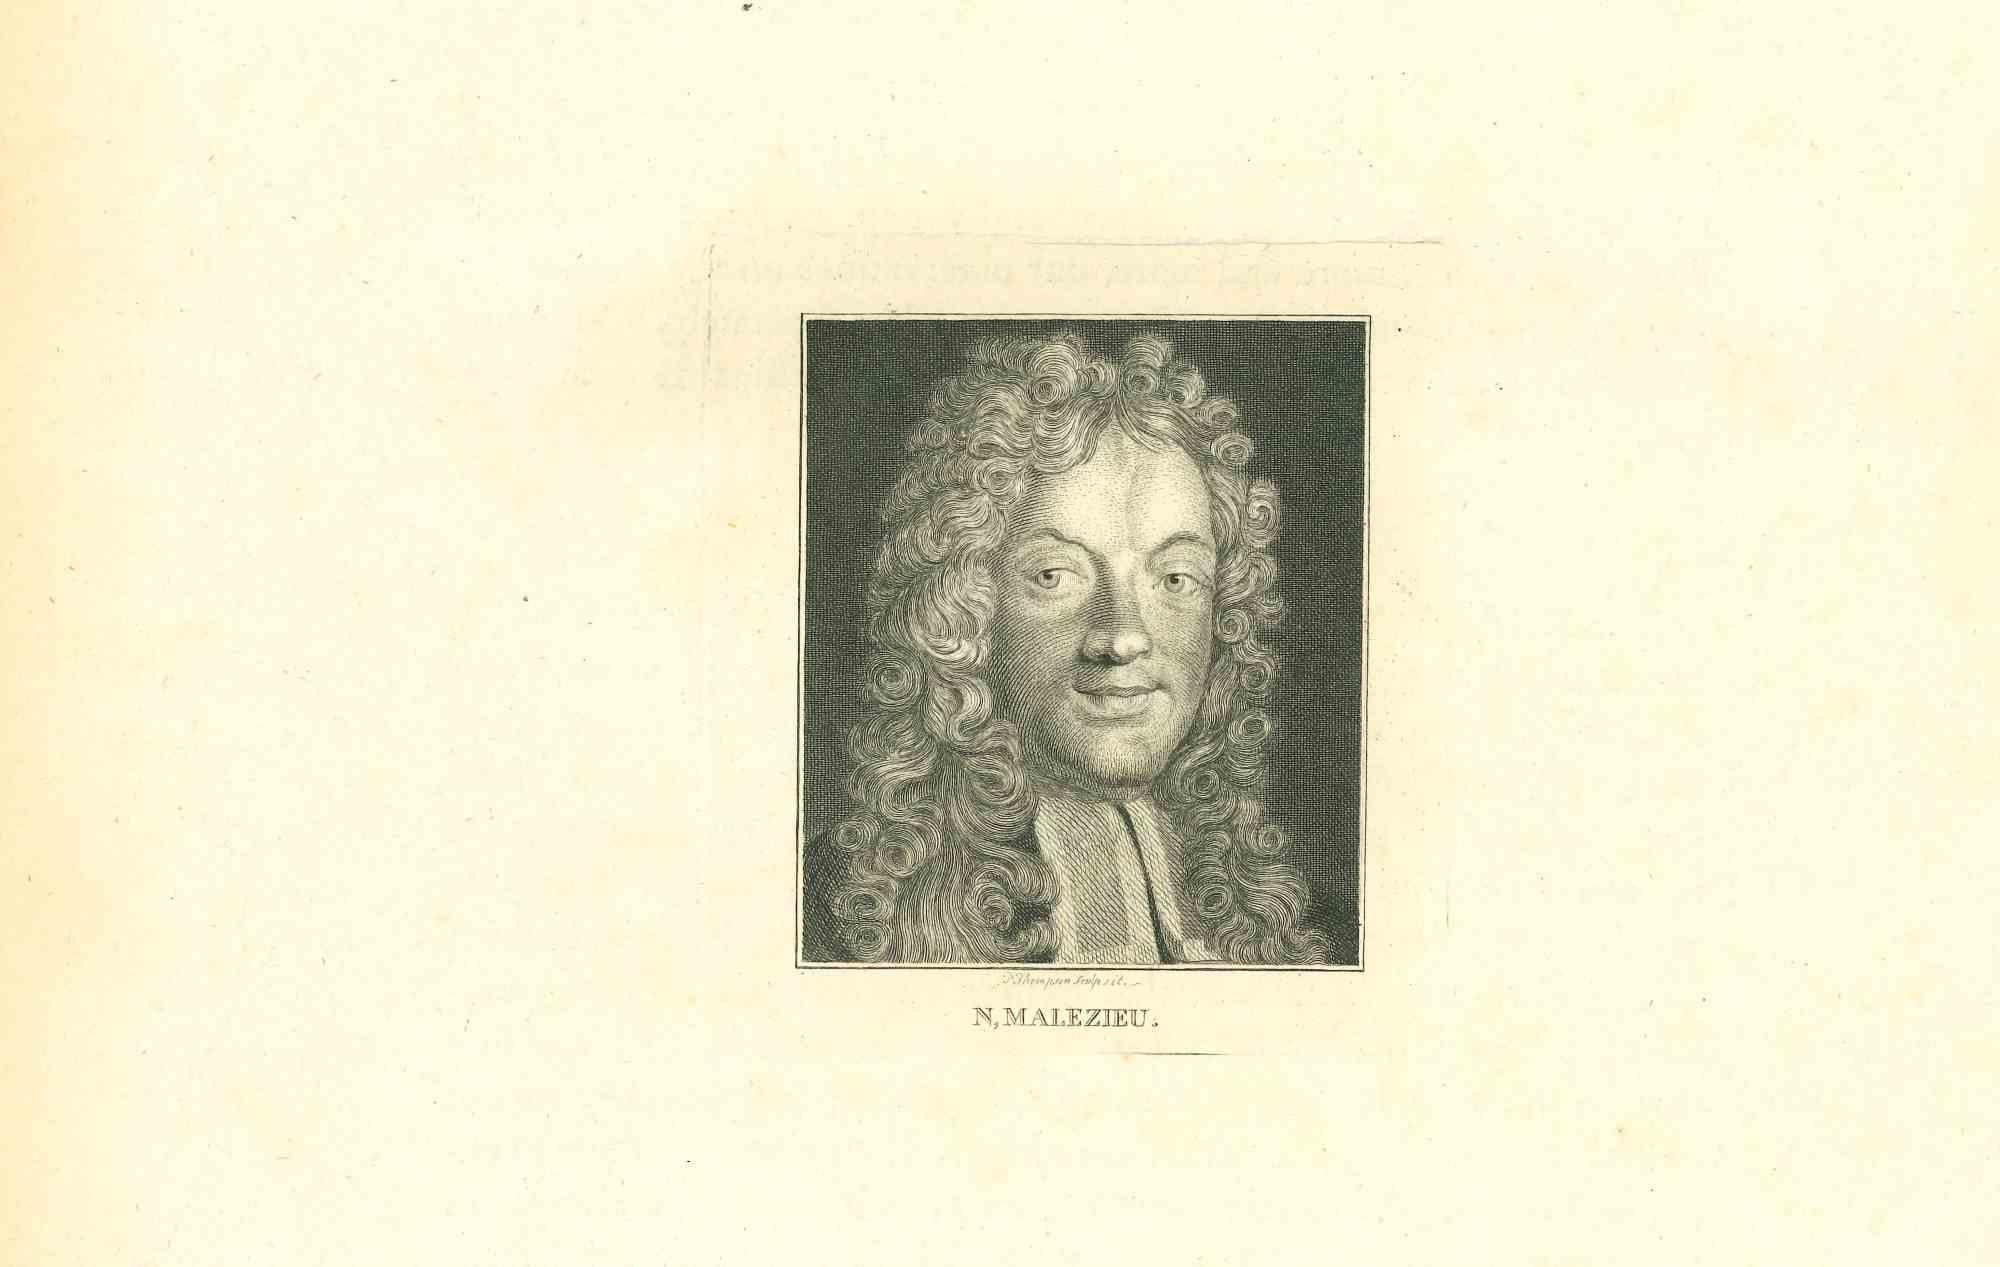  Portrait of Nicolas Malezieu - Original Etching by Thomas Holloway - 1810